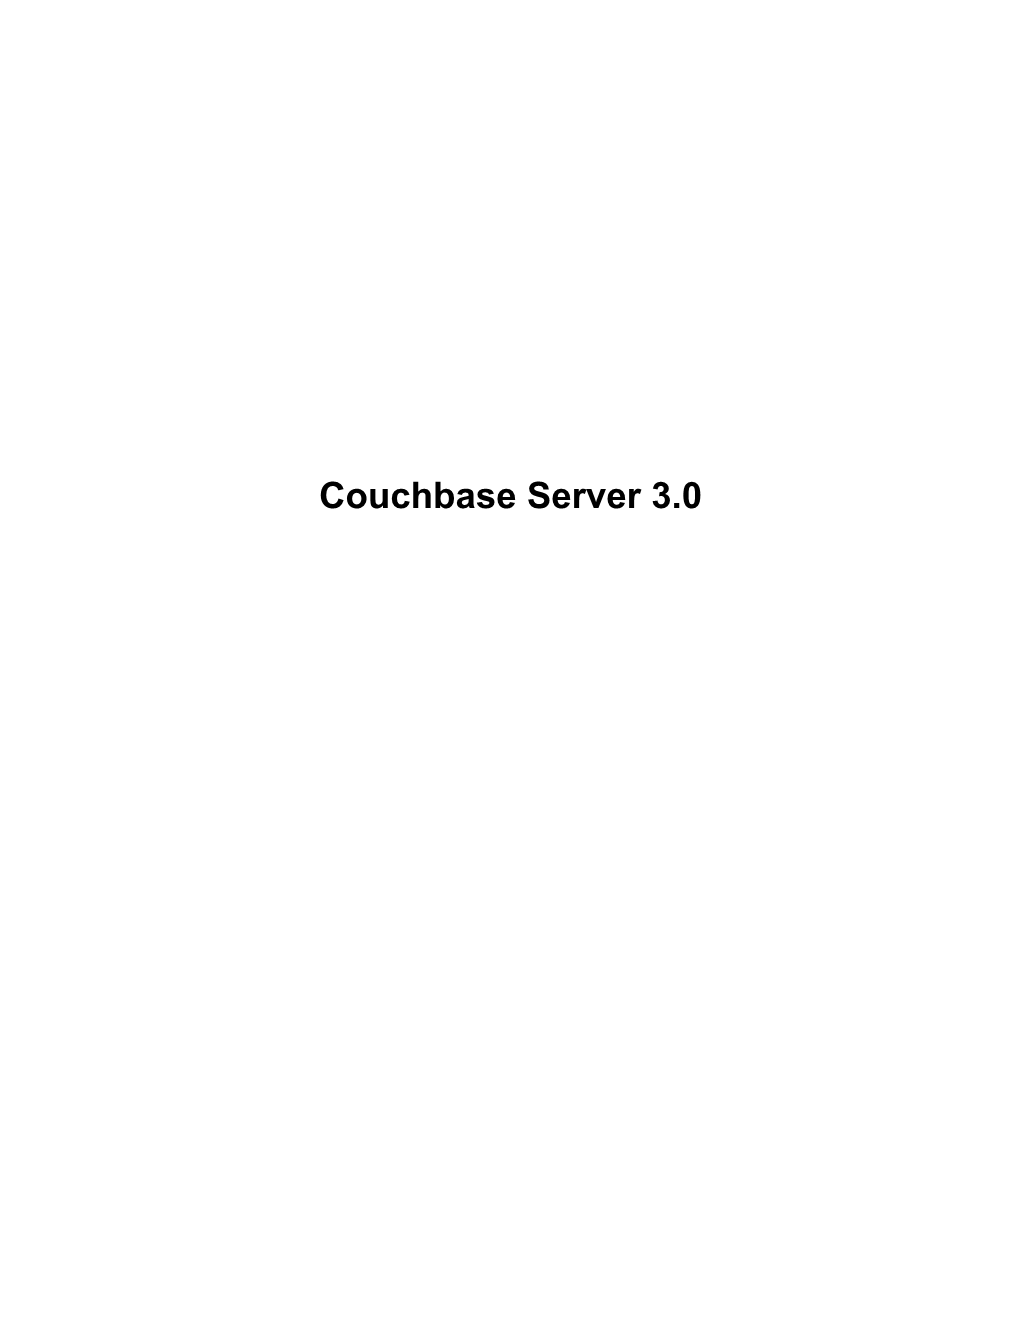 Couchbase Server 3.0 | Contents | 2